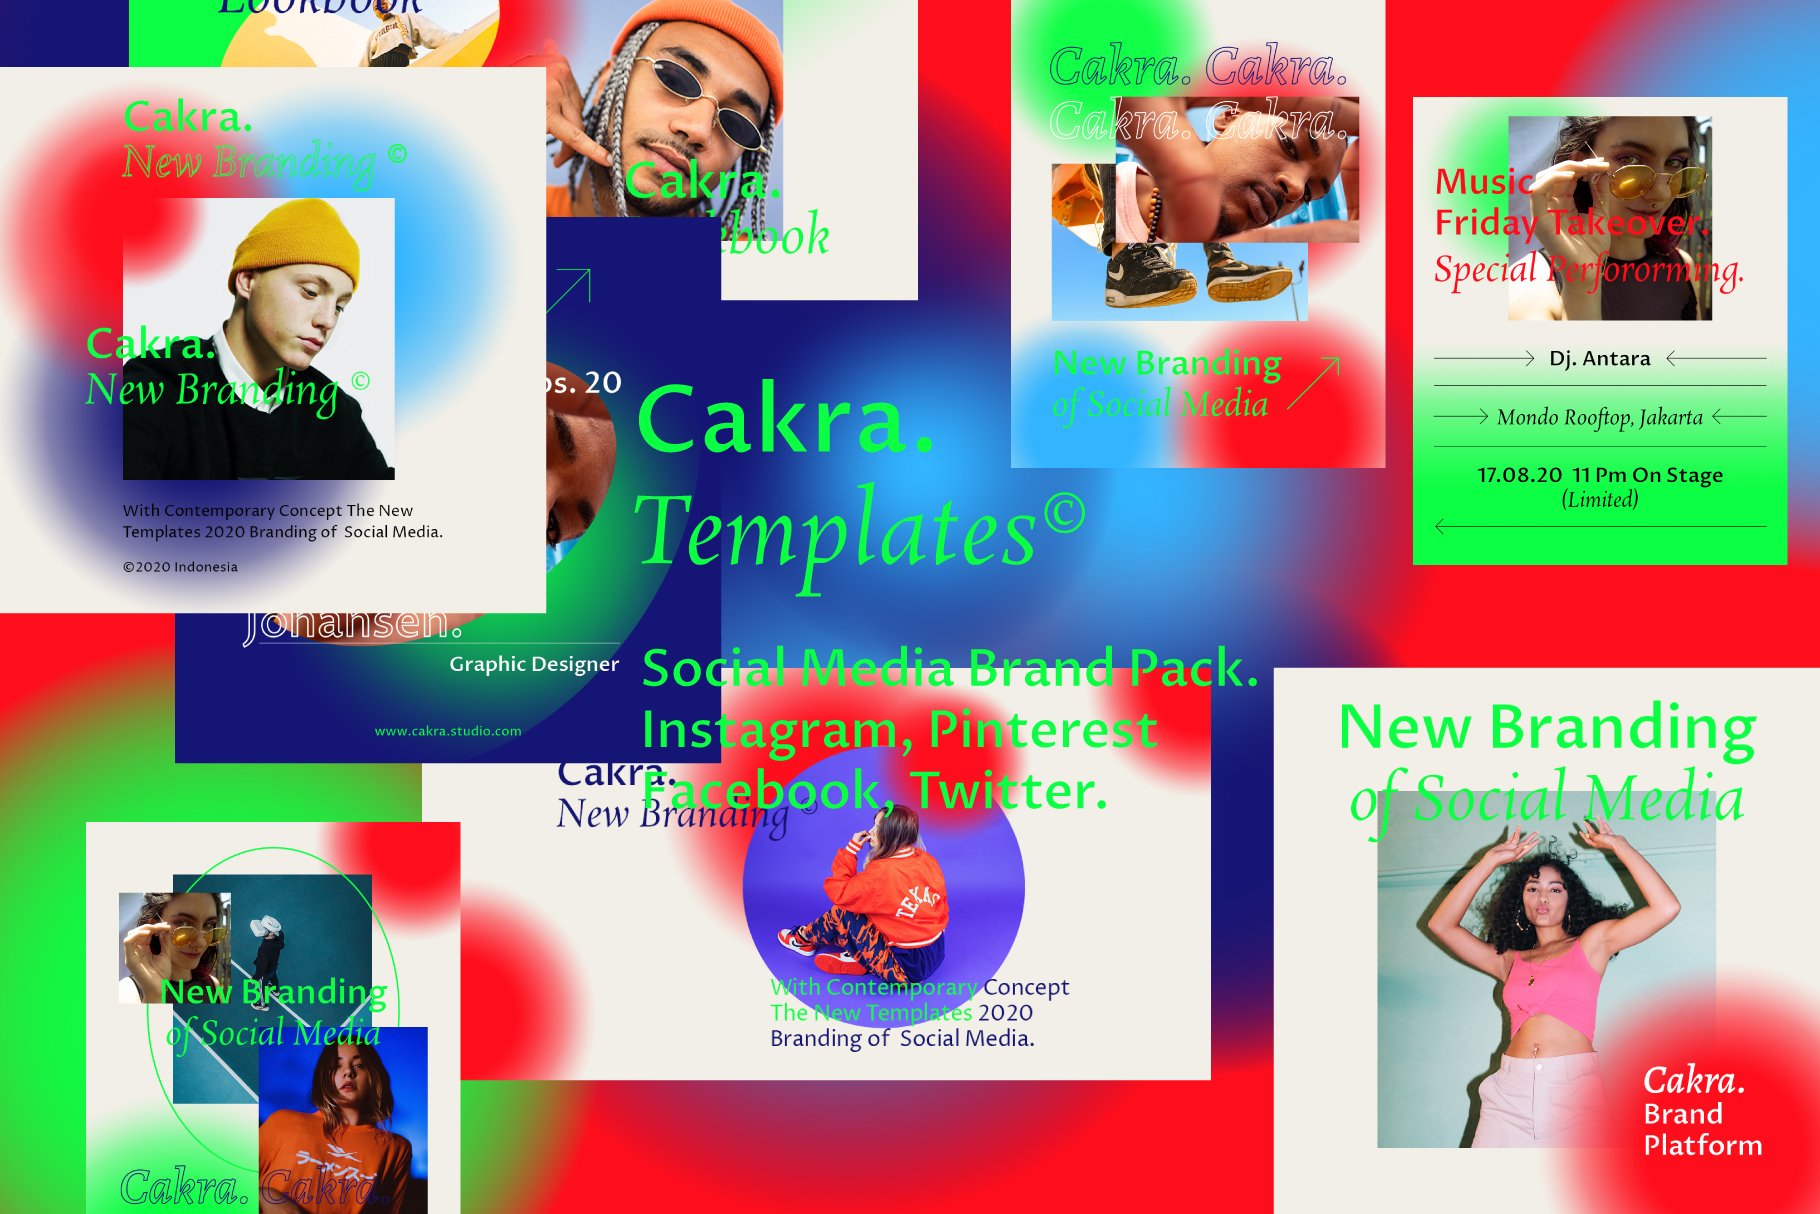 CAKRA - Social Media Kit Templates cover image.